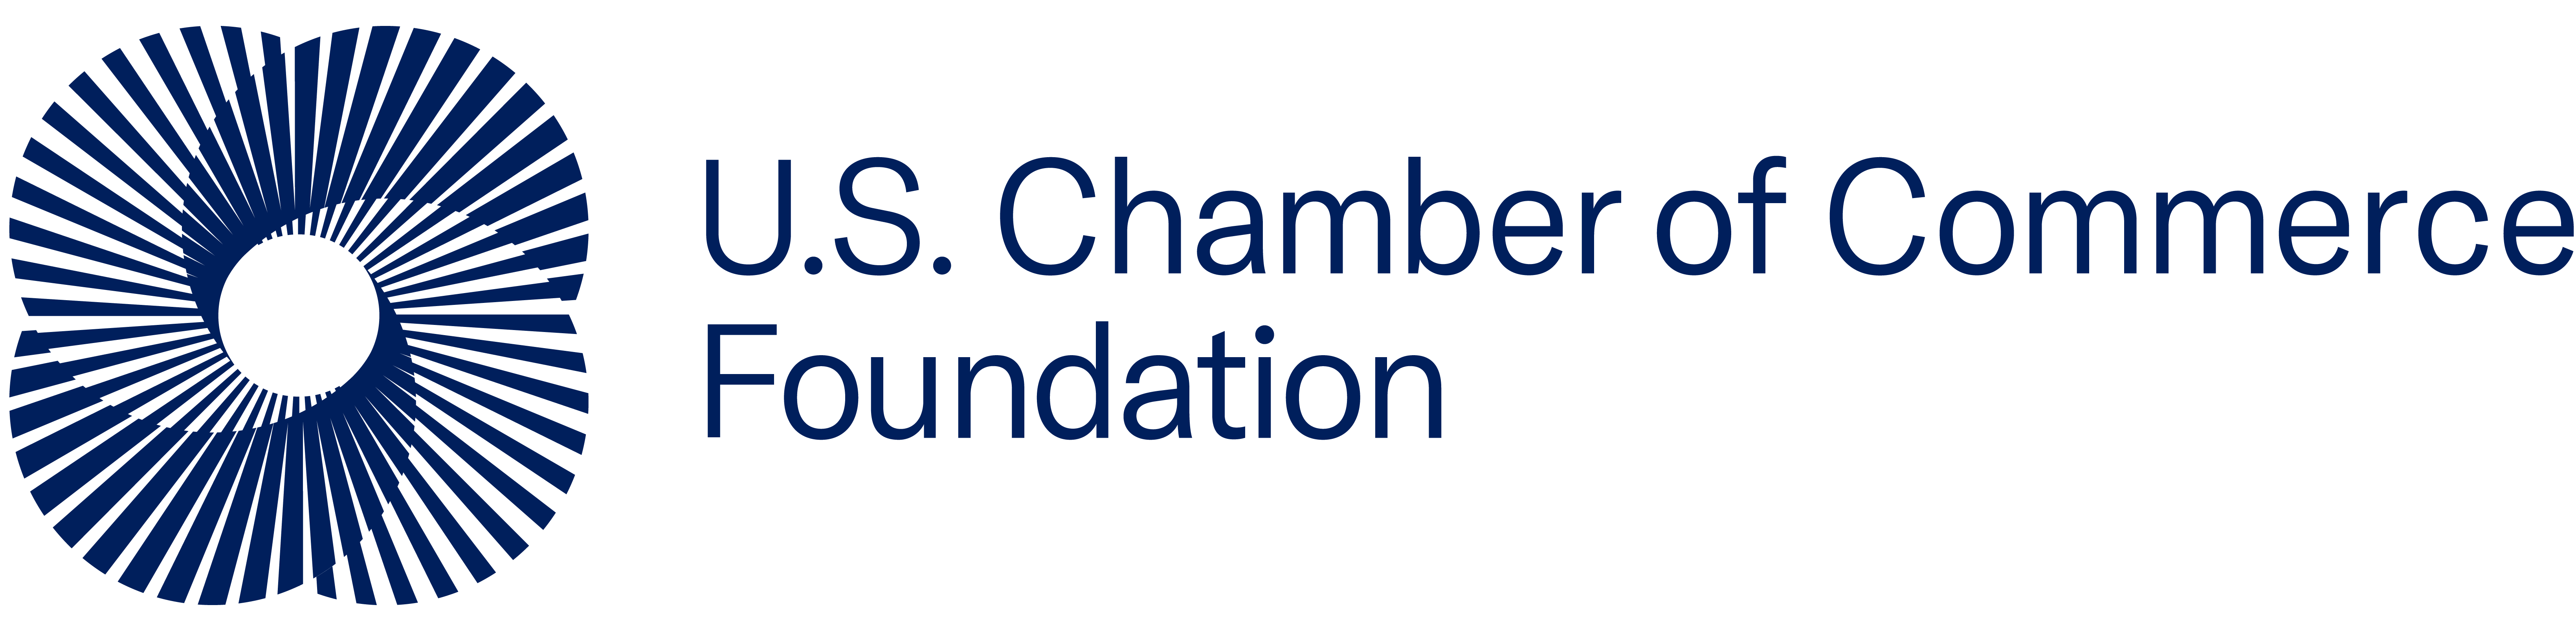 U.S. Chamber of Commerce Foundation logo